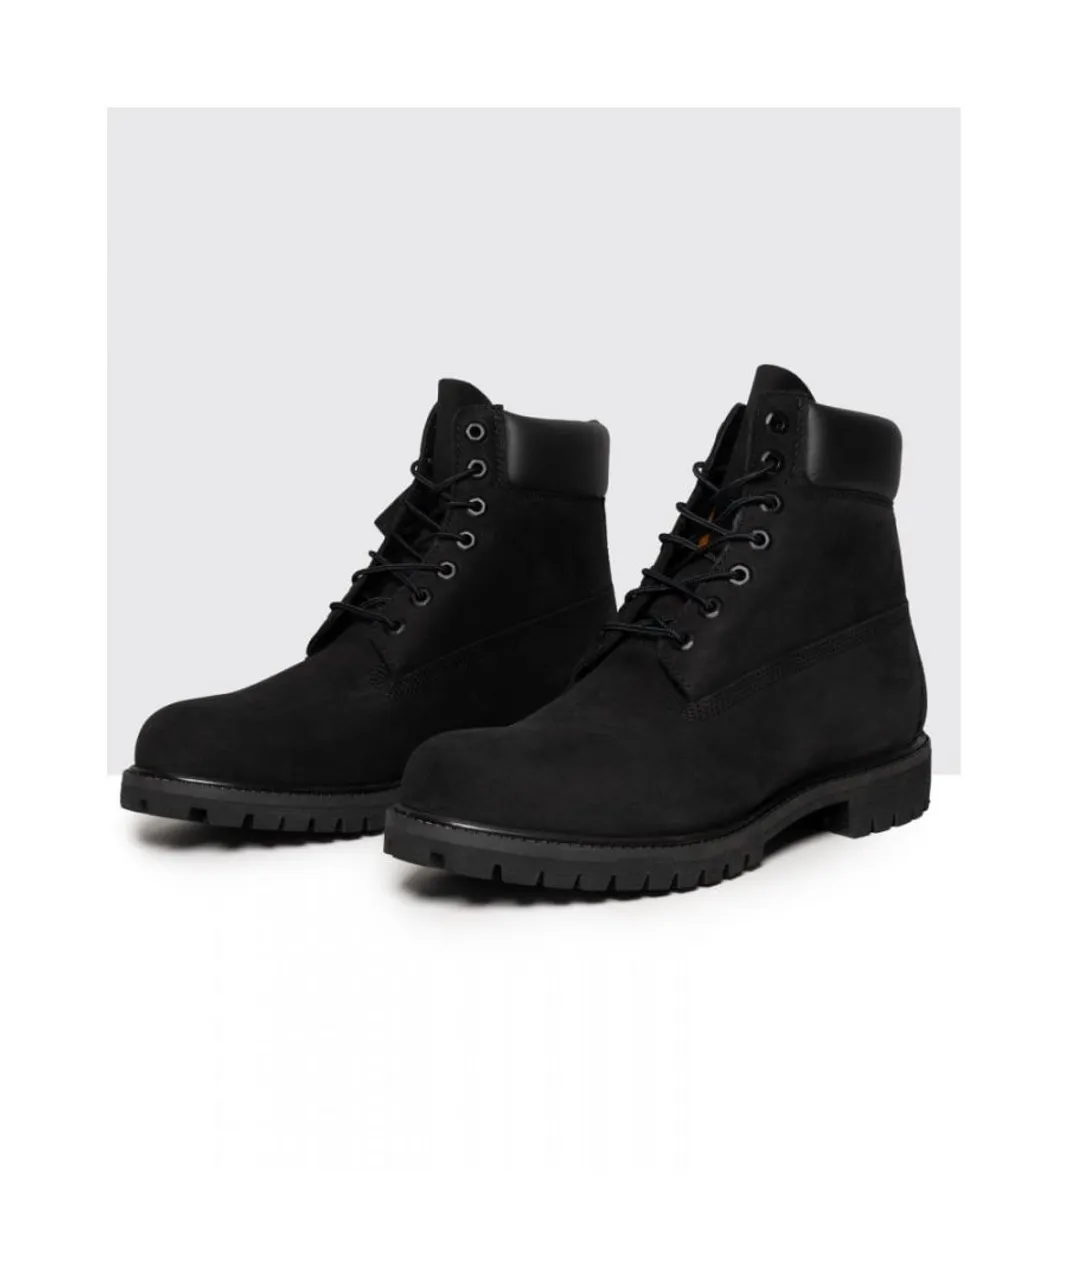 Timberland 6 Inch Premium Mens Waterproof Boots - Black